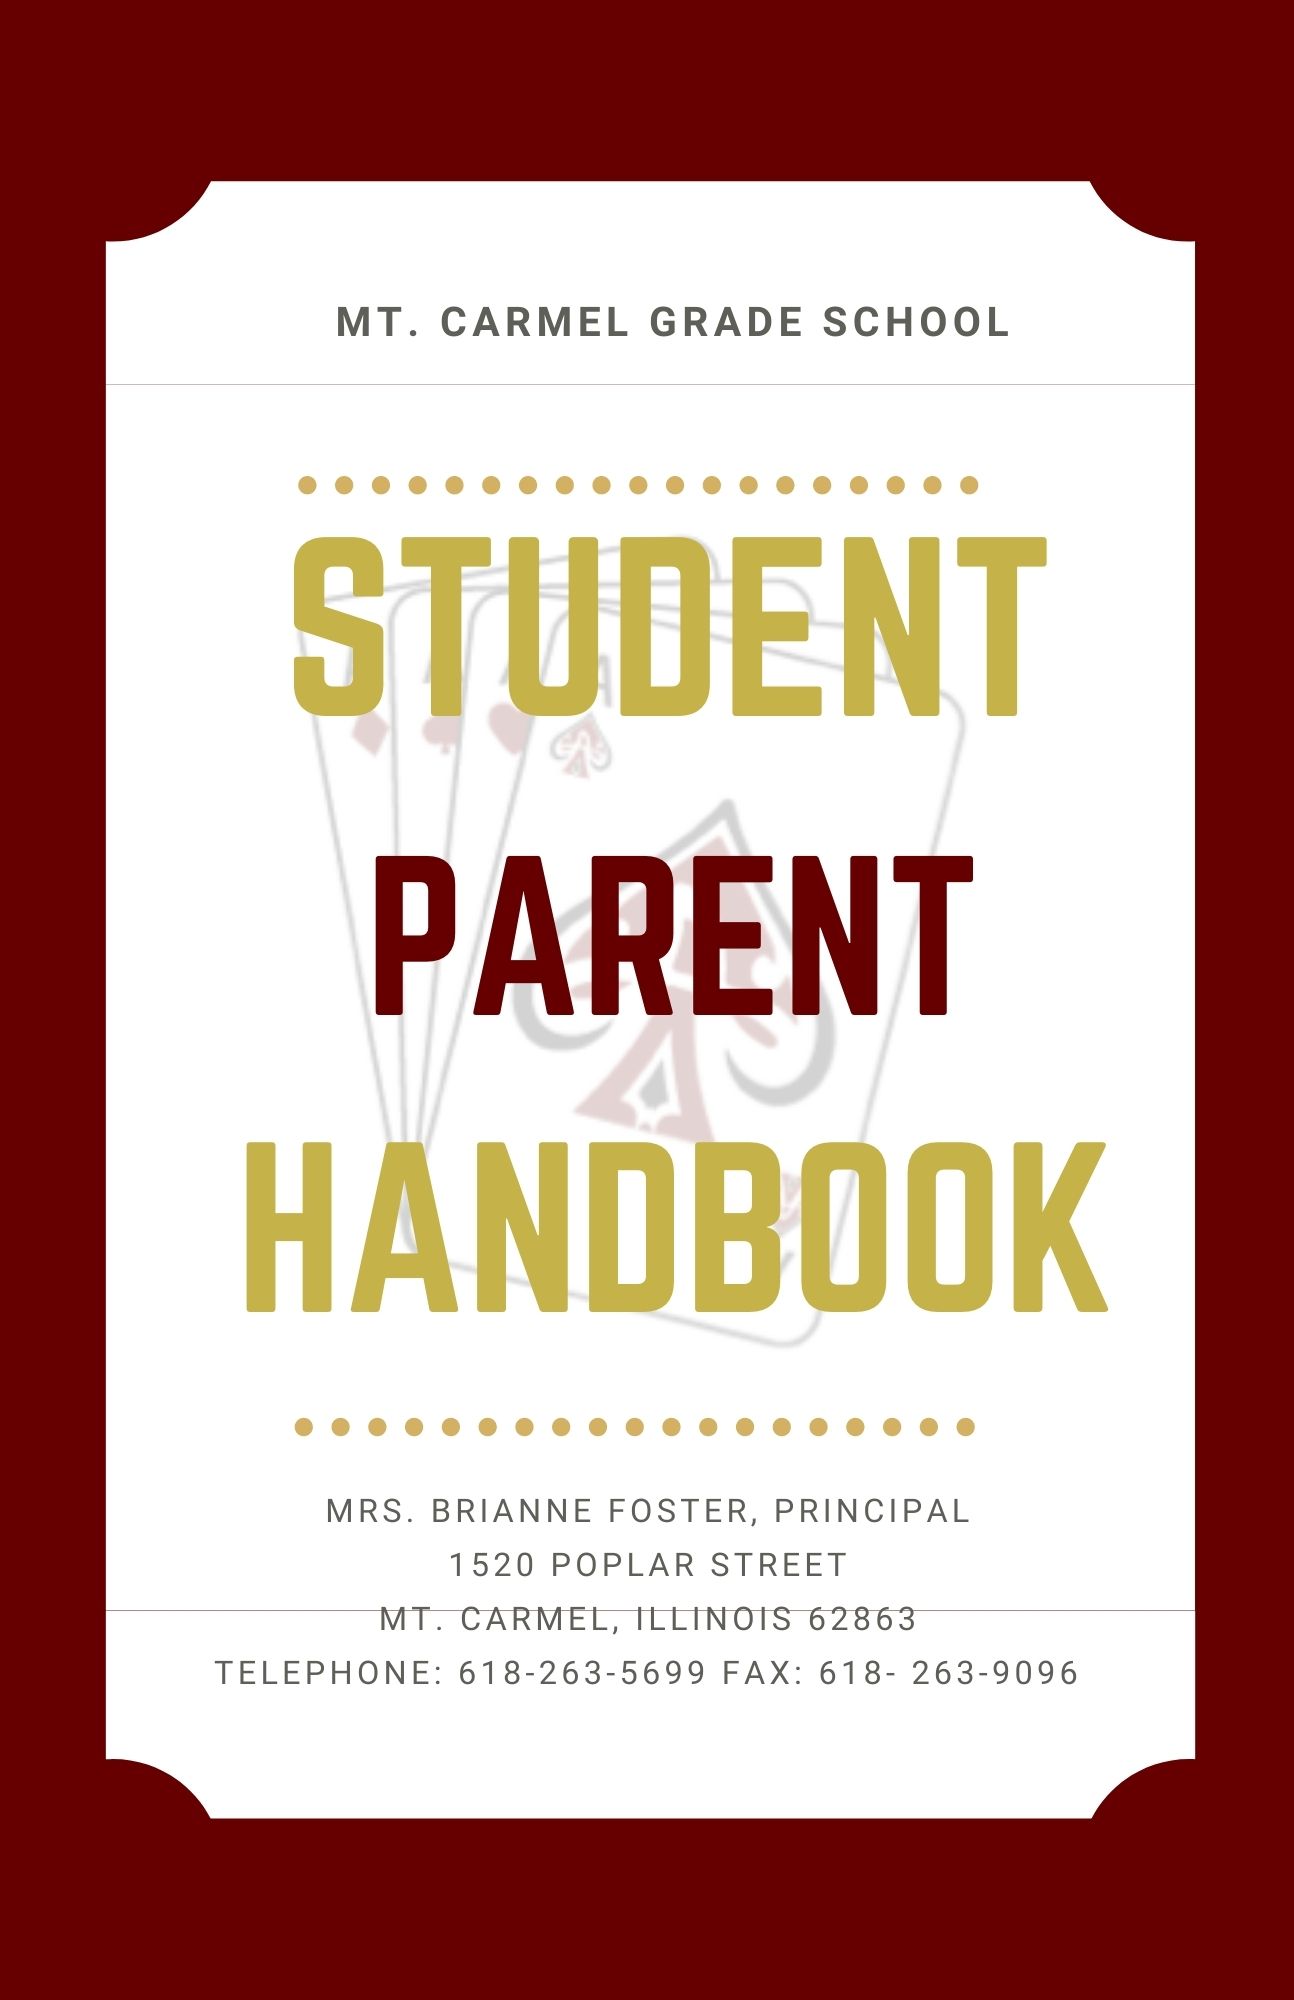 MCGS student parent handbook